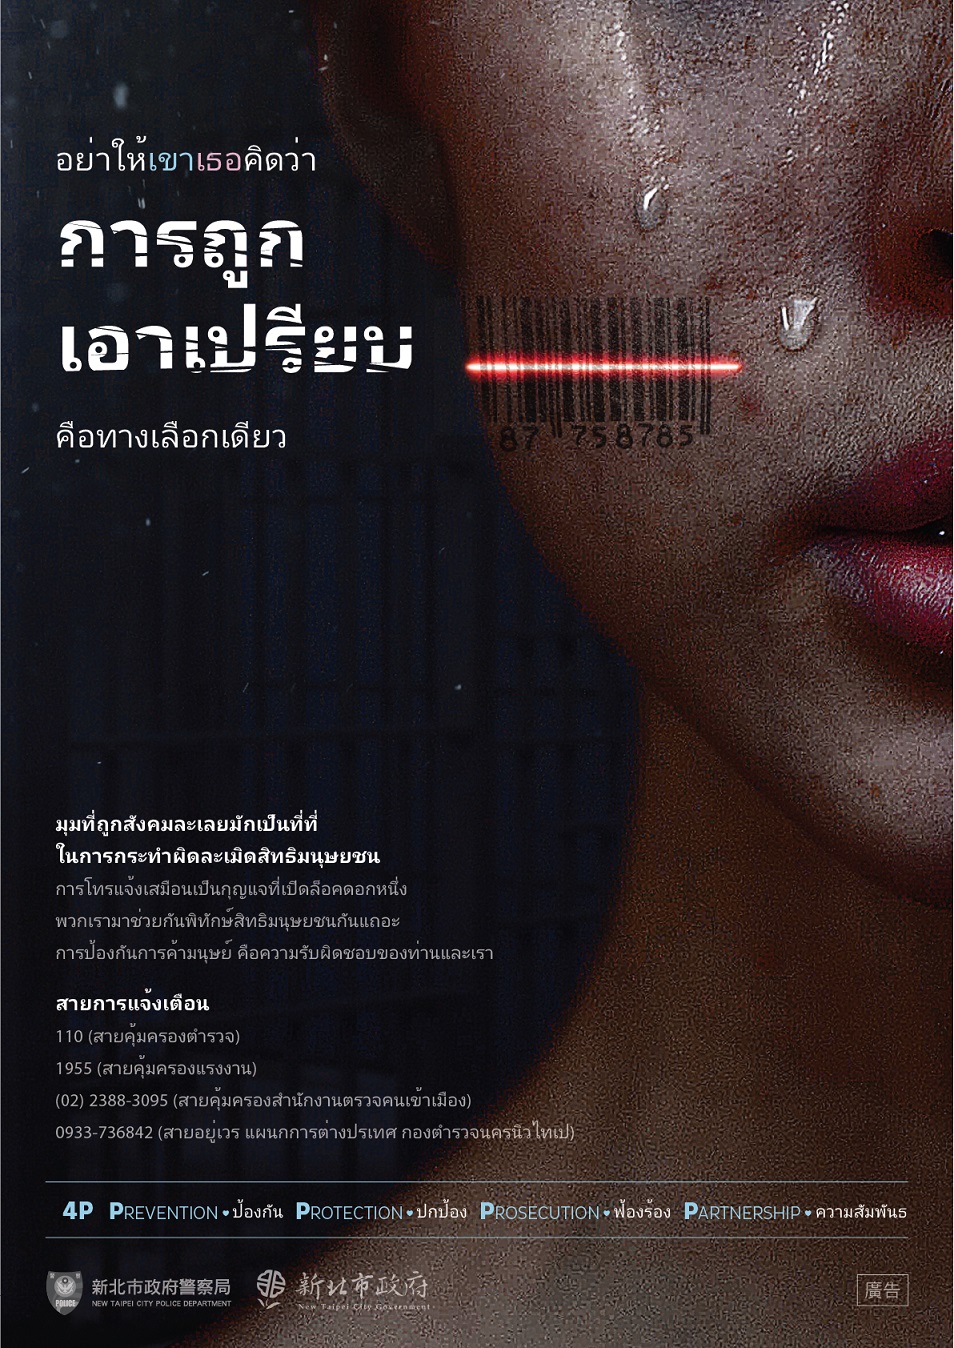 anti-human trafficking Propaganda poster picture in Taibun